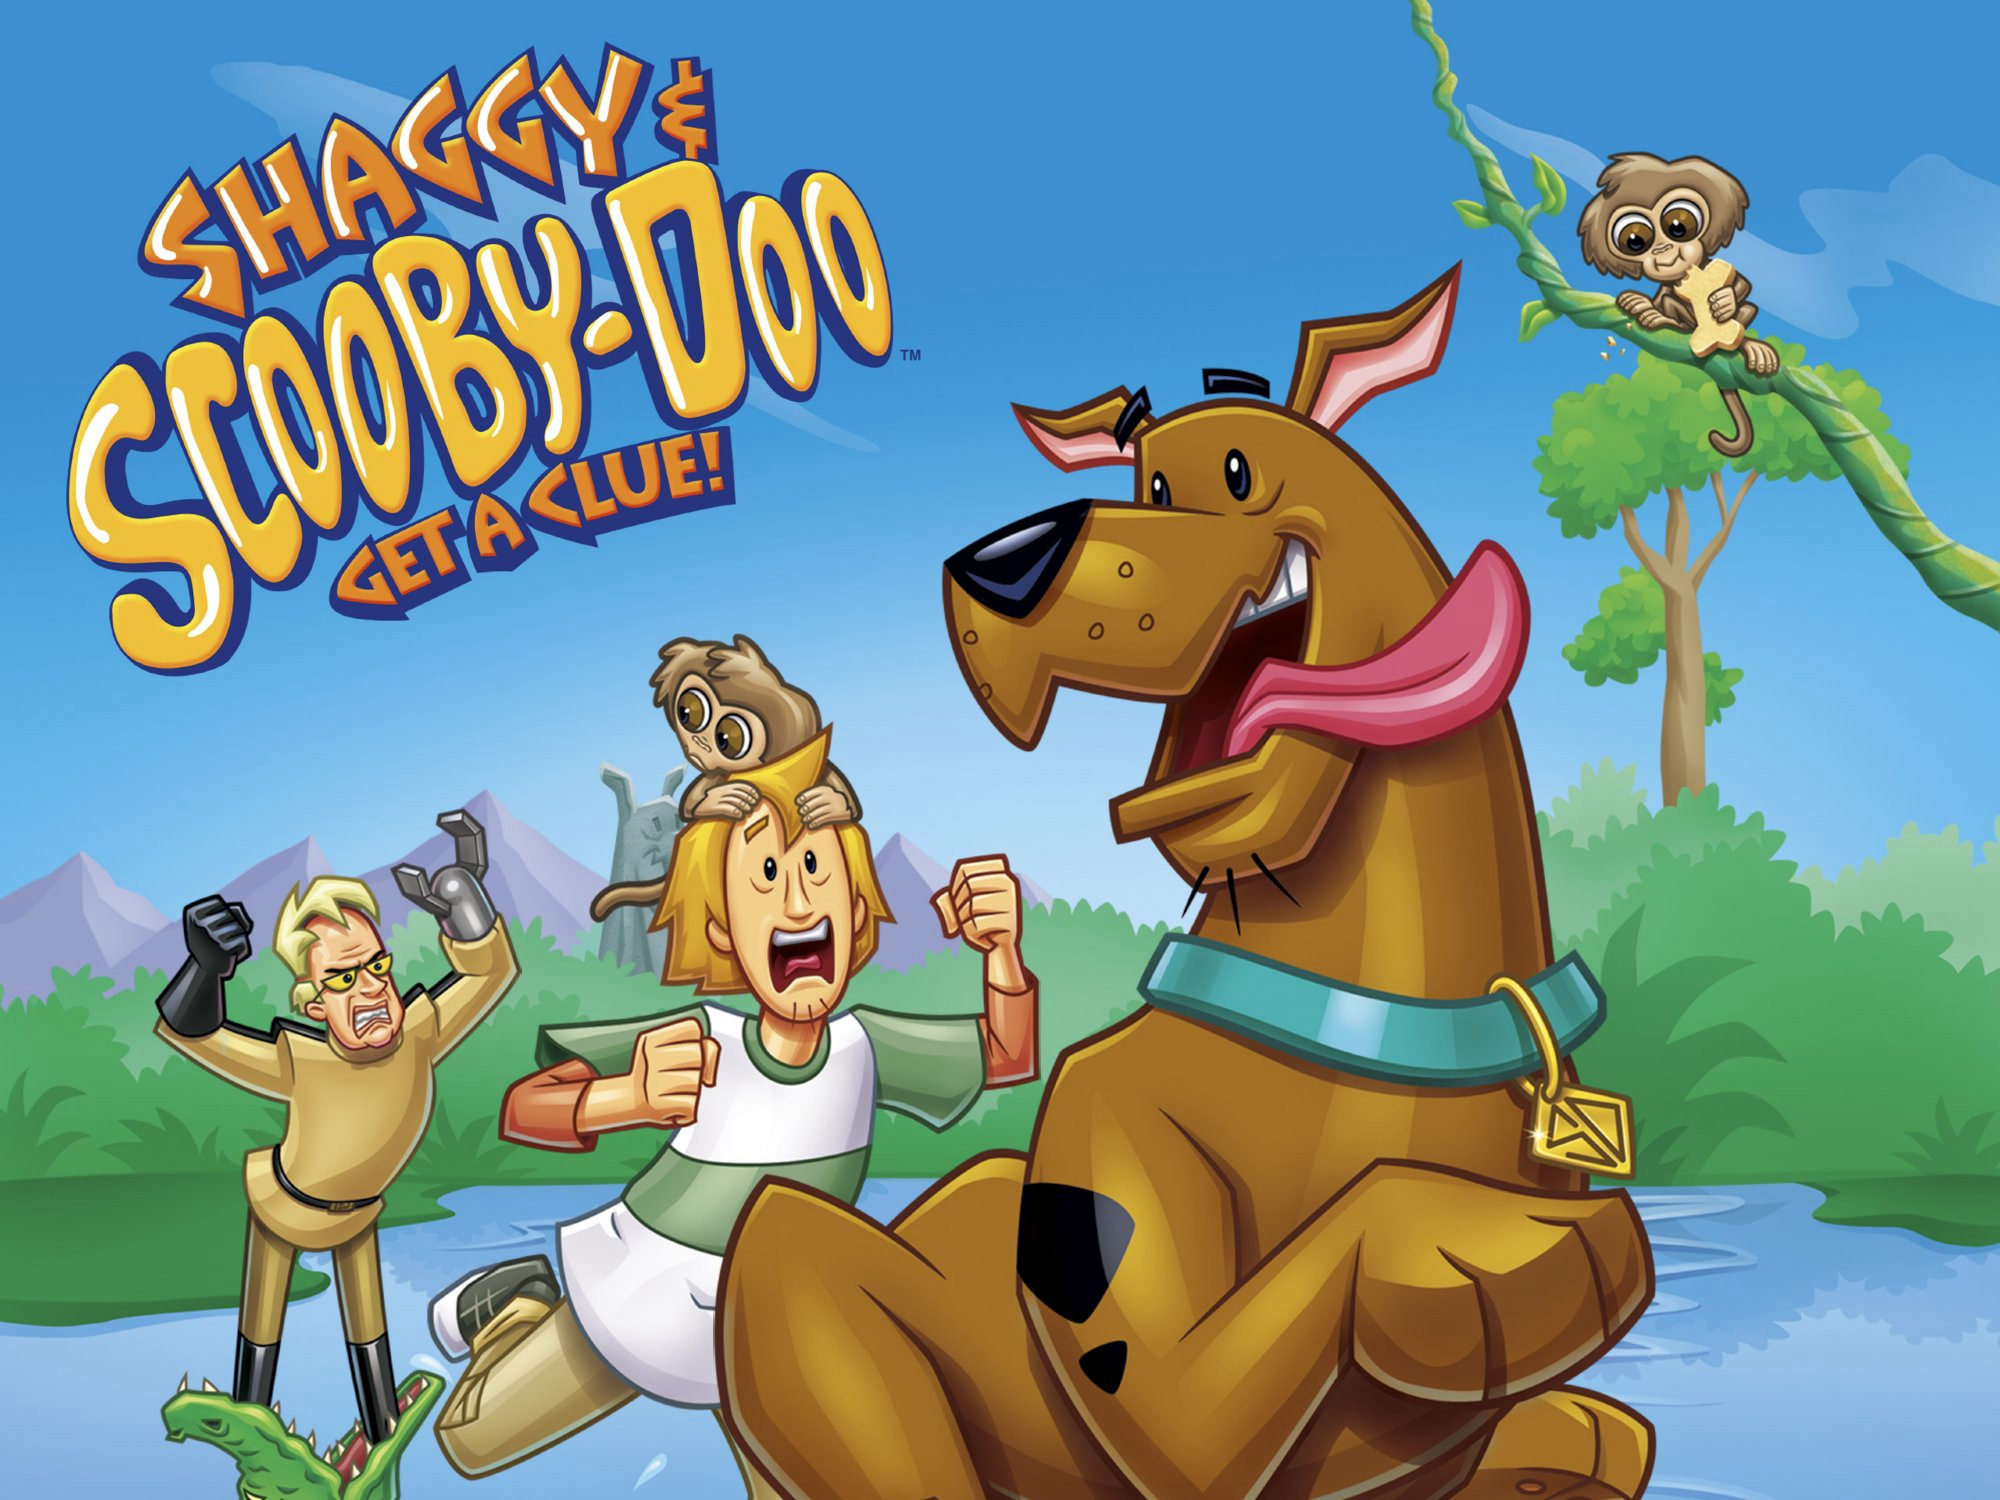 Shaggy & Scooby-Doo Get a Clue! (Phần 2) - Shaggy & Scooby-Doo Get a Clue! (Season 2) (2007)